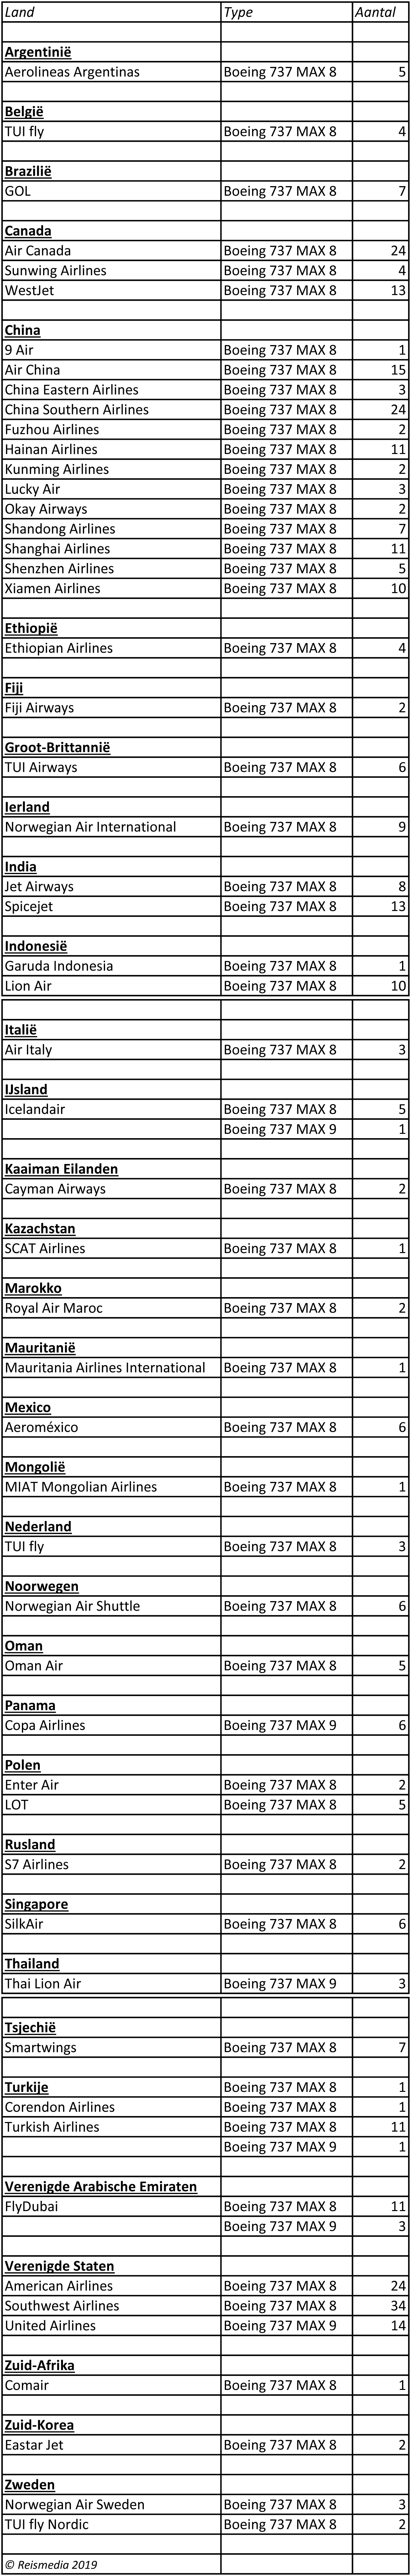 Boeing 737 MAX operators